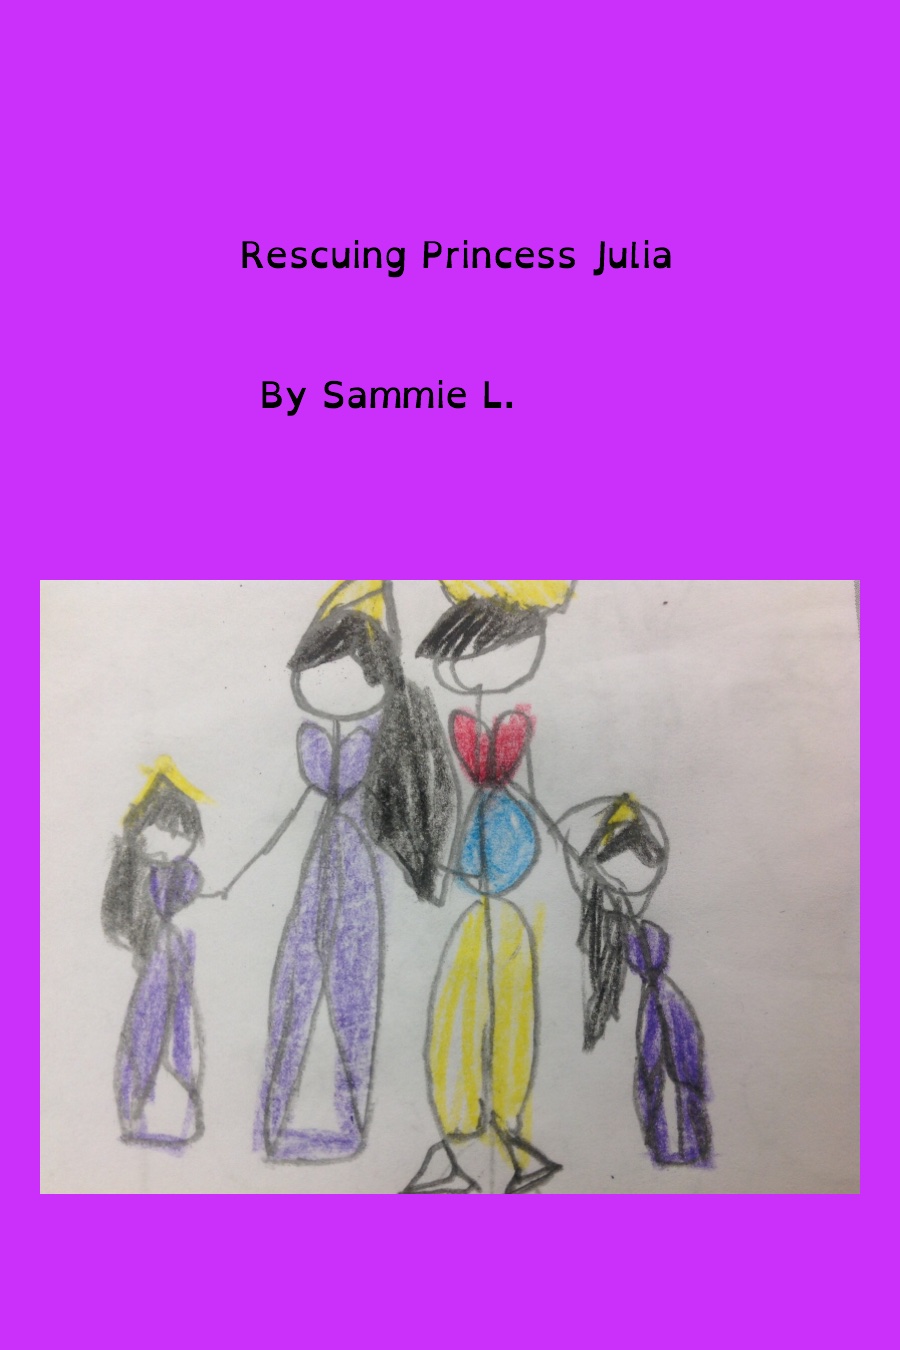 Rescuing Princess Julia by Samantha Sammie L